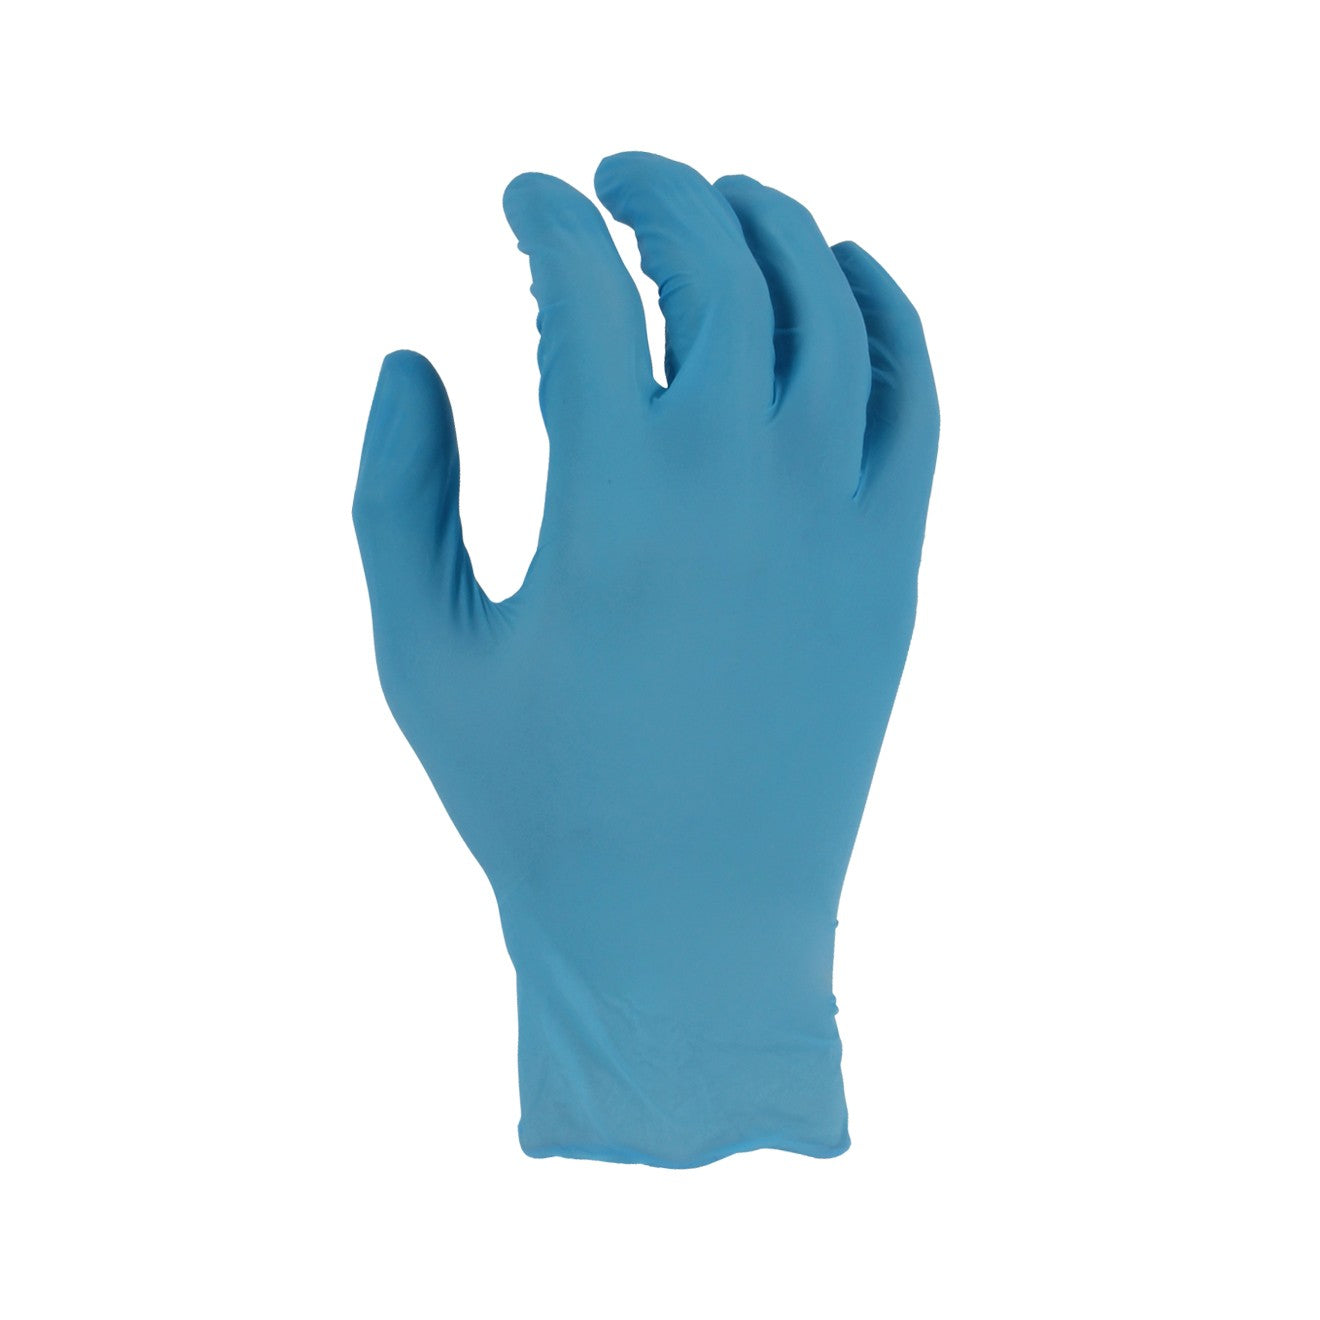 Blackrock Disposable Nitrile Gloves Size (Box of 100)